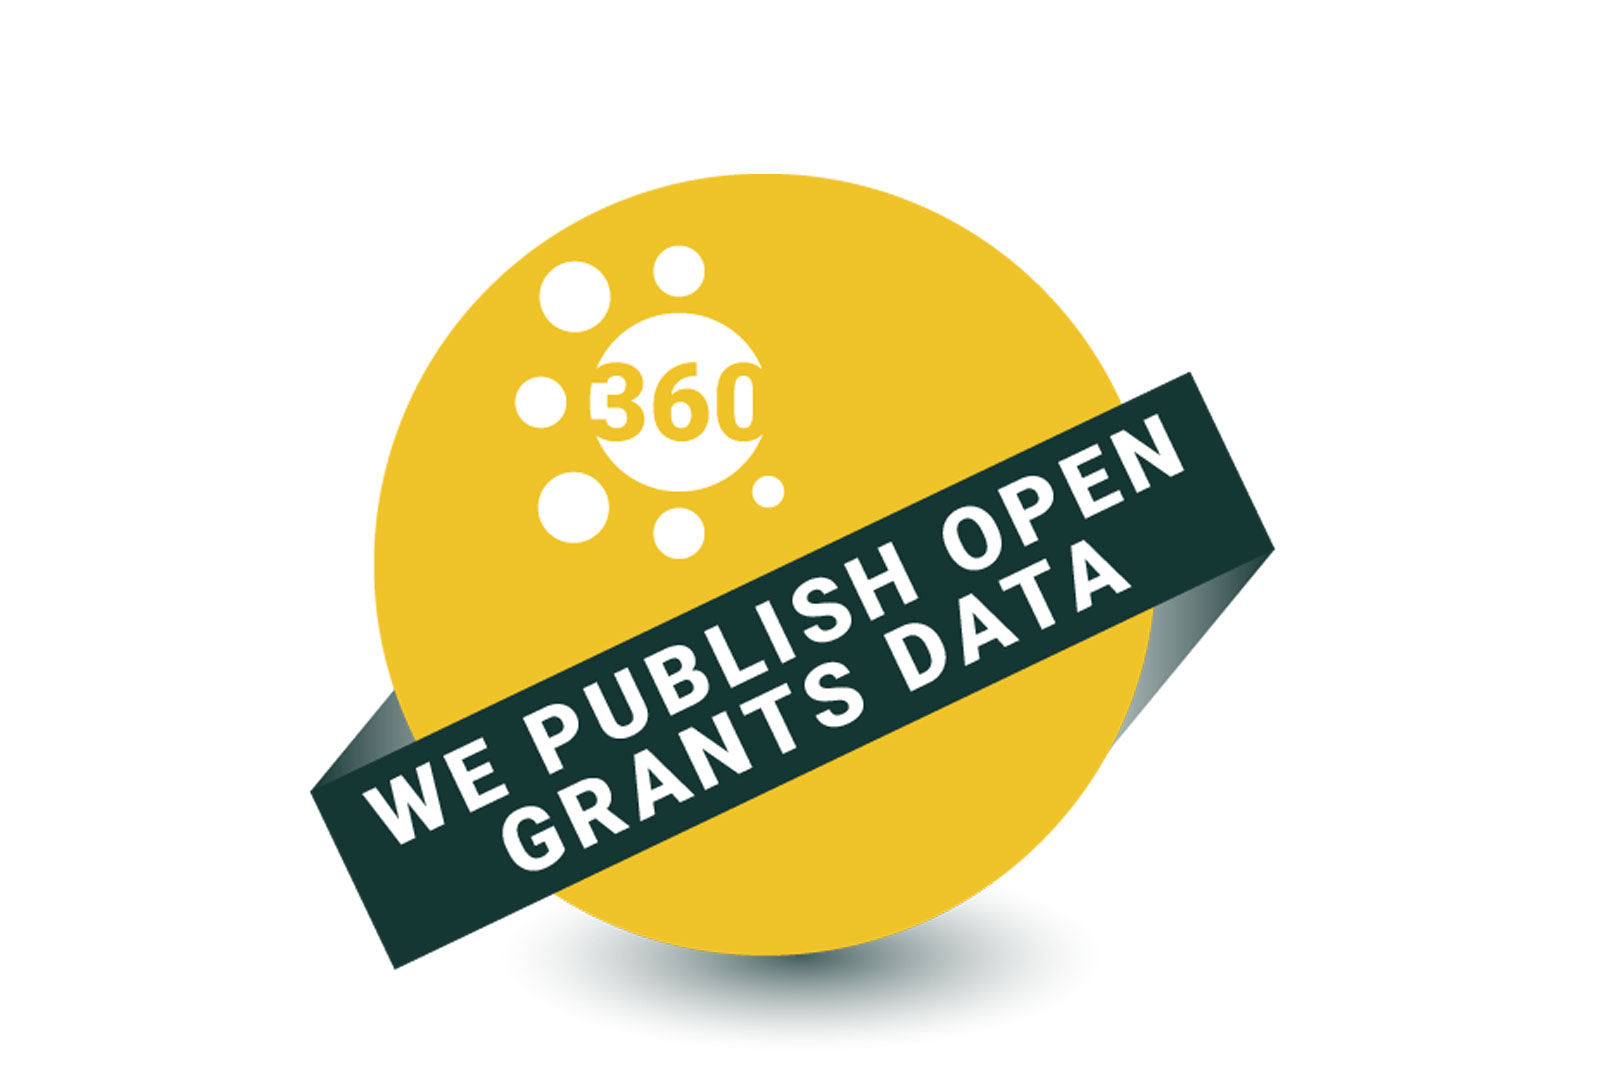 360 Giving We publish open data logo